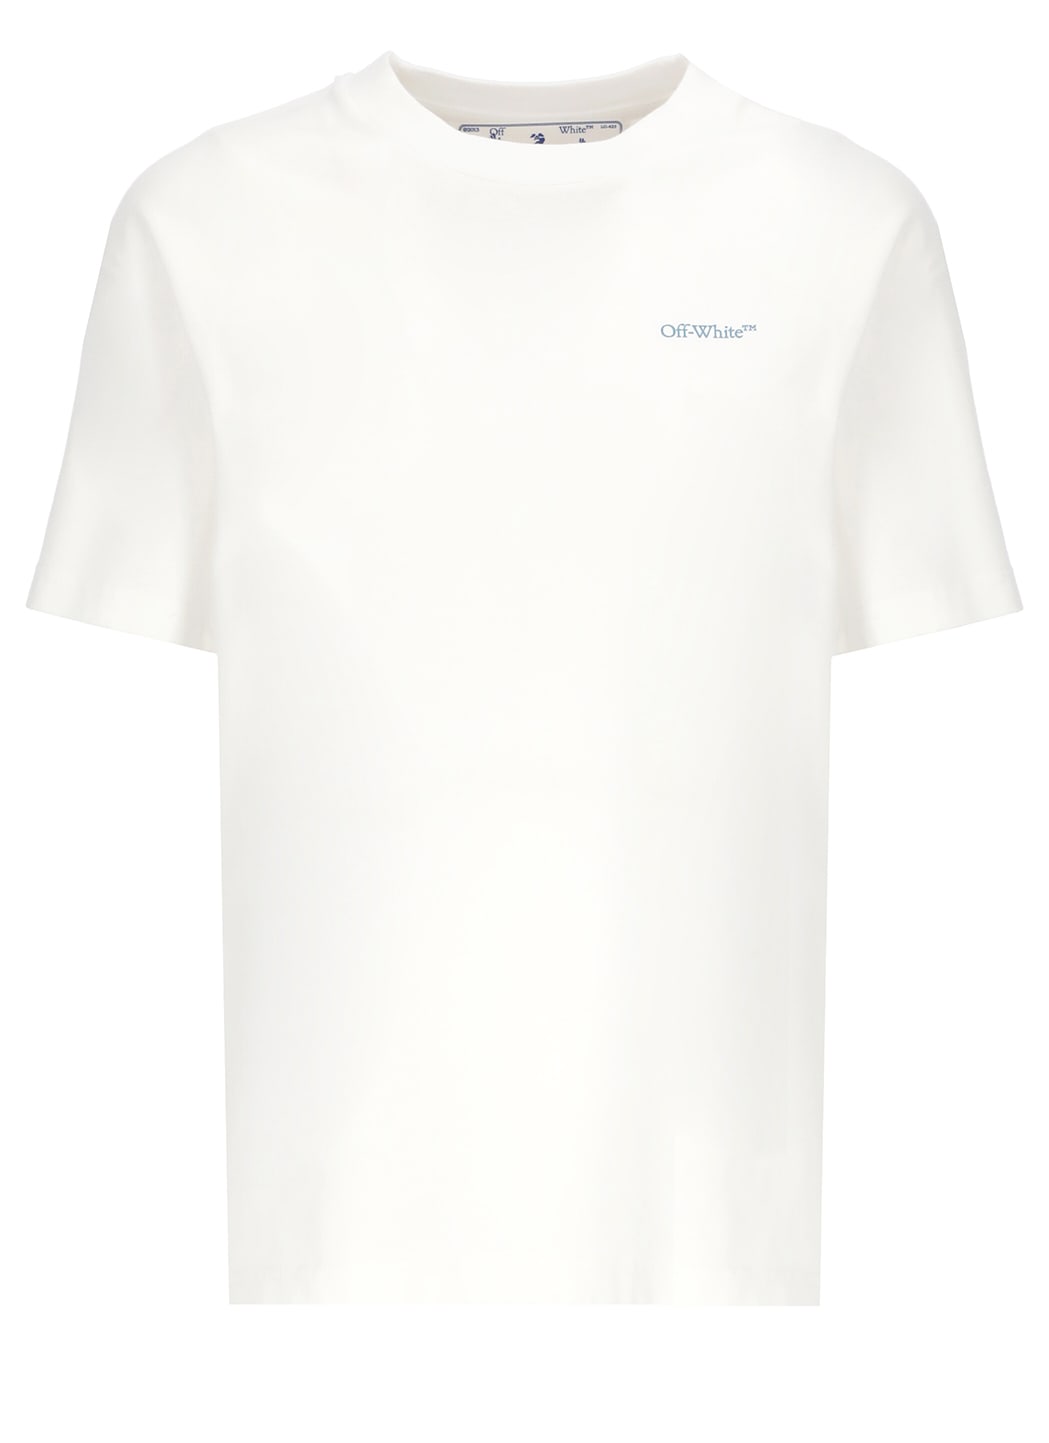 Off-White Blurred Arrow T-shirt